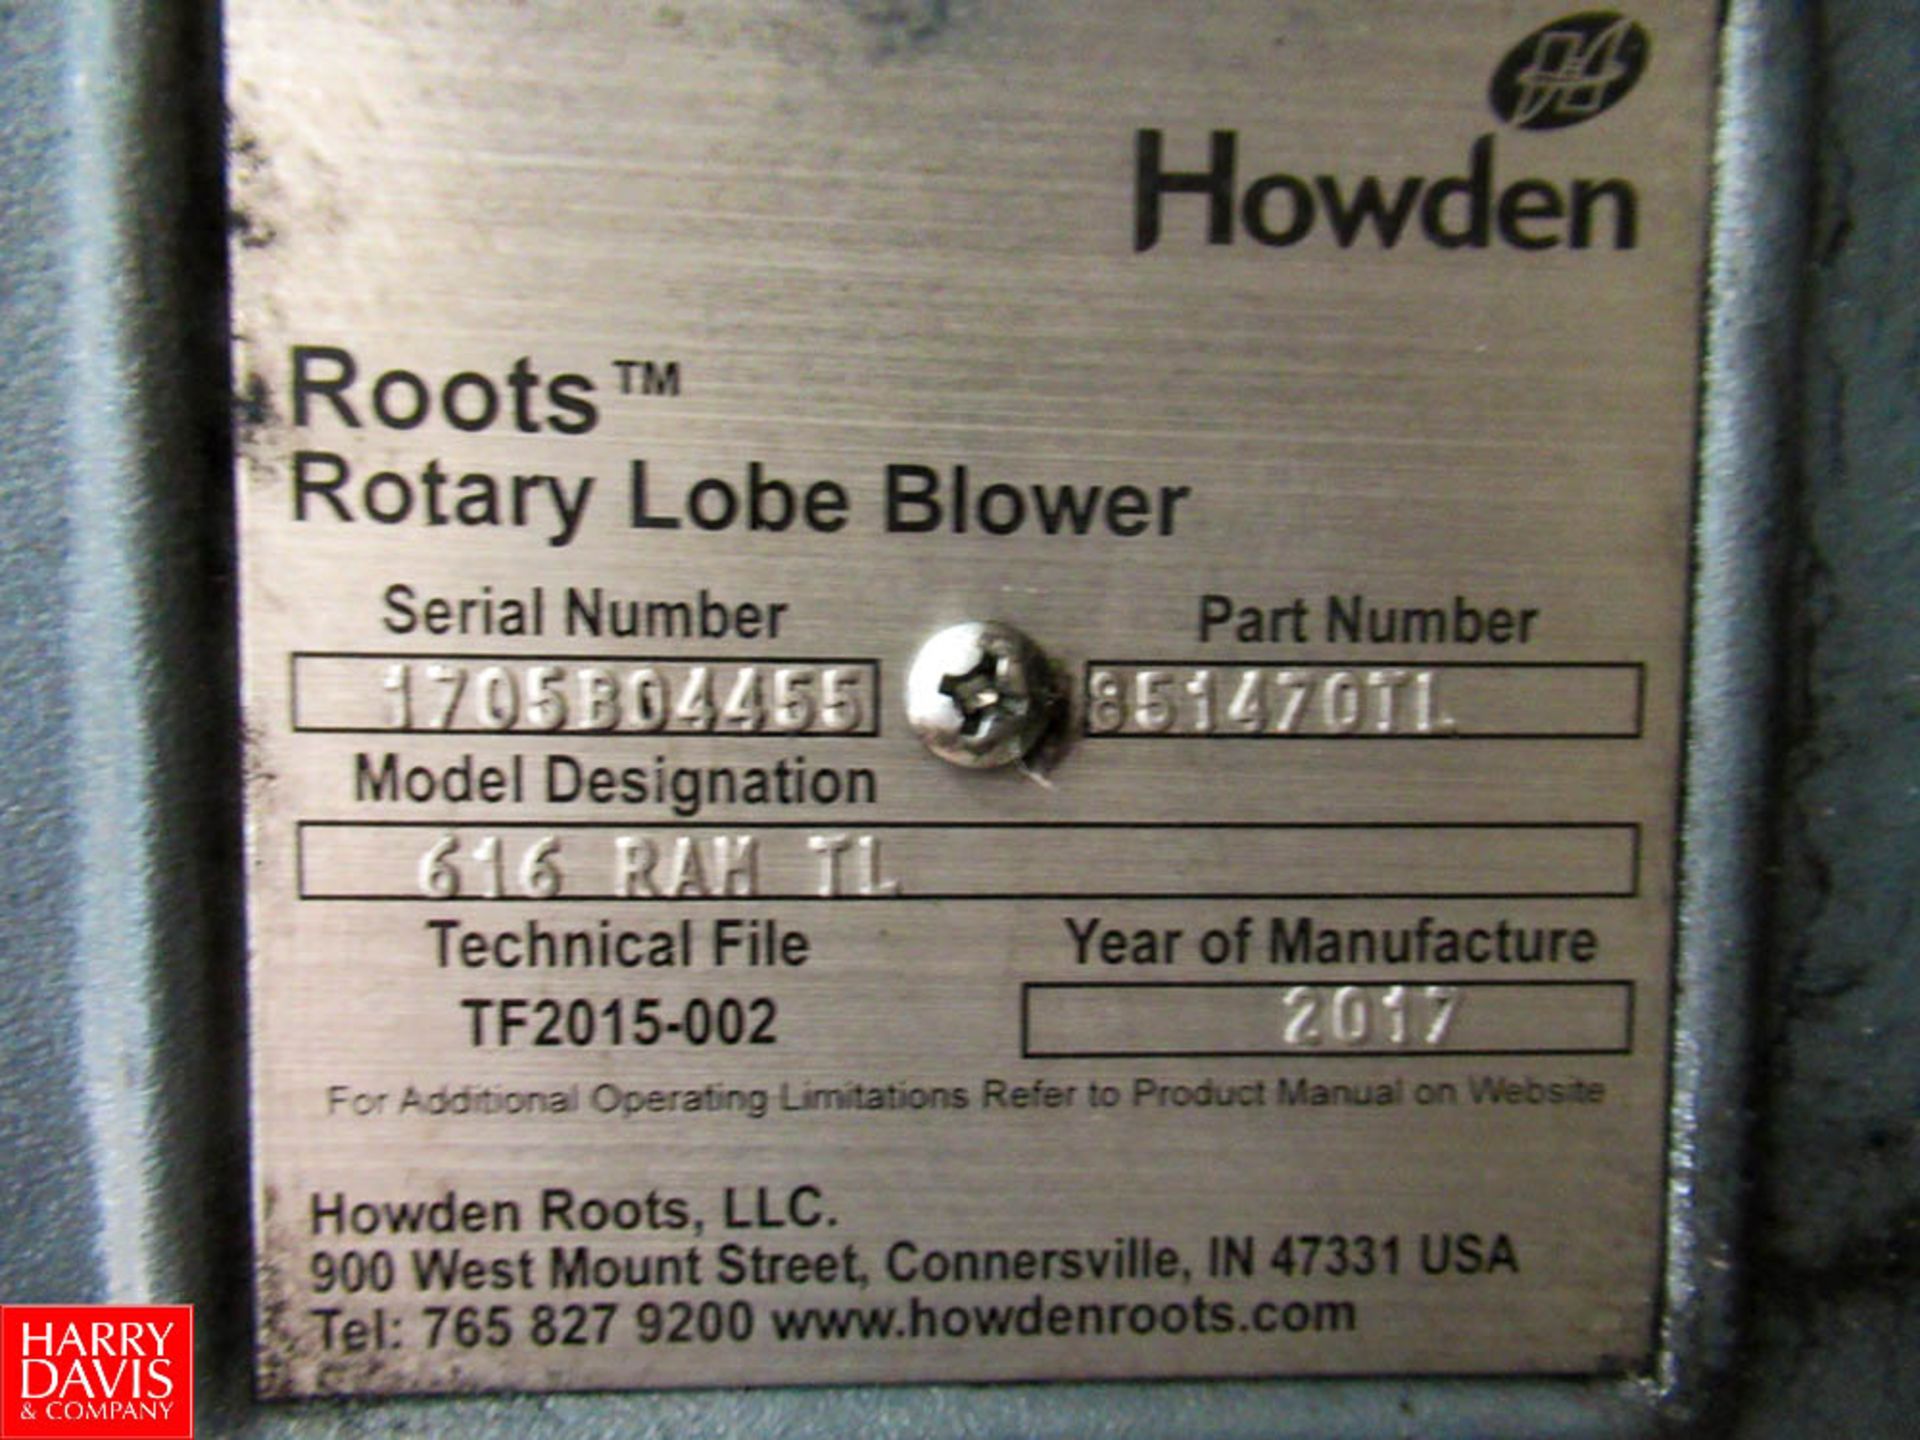 2017 Howden Roots Rotary Lobe 125 HP Blower, Model: 616 RAM TL SN: 1705B04455, 1780 RPM, 460 Volt, - Image 2 of 4